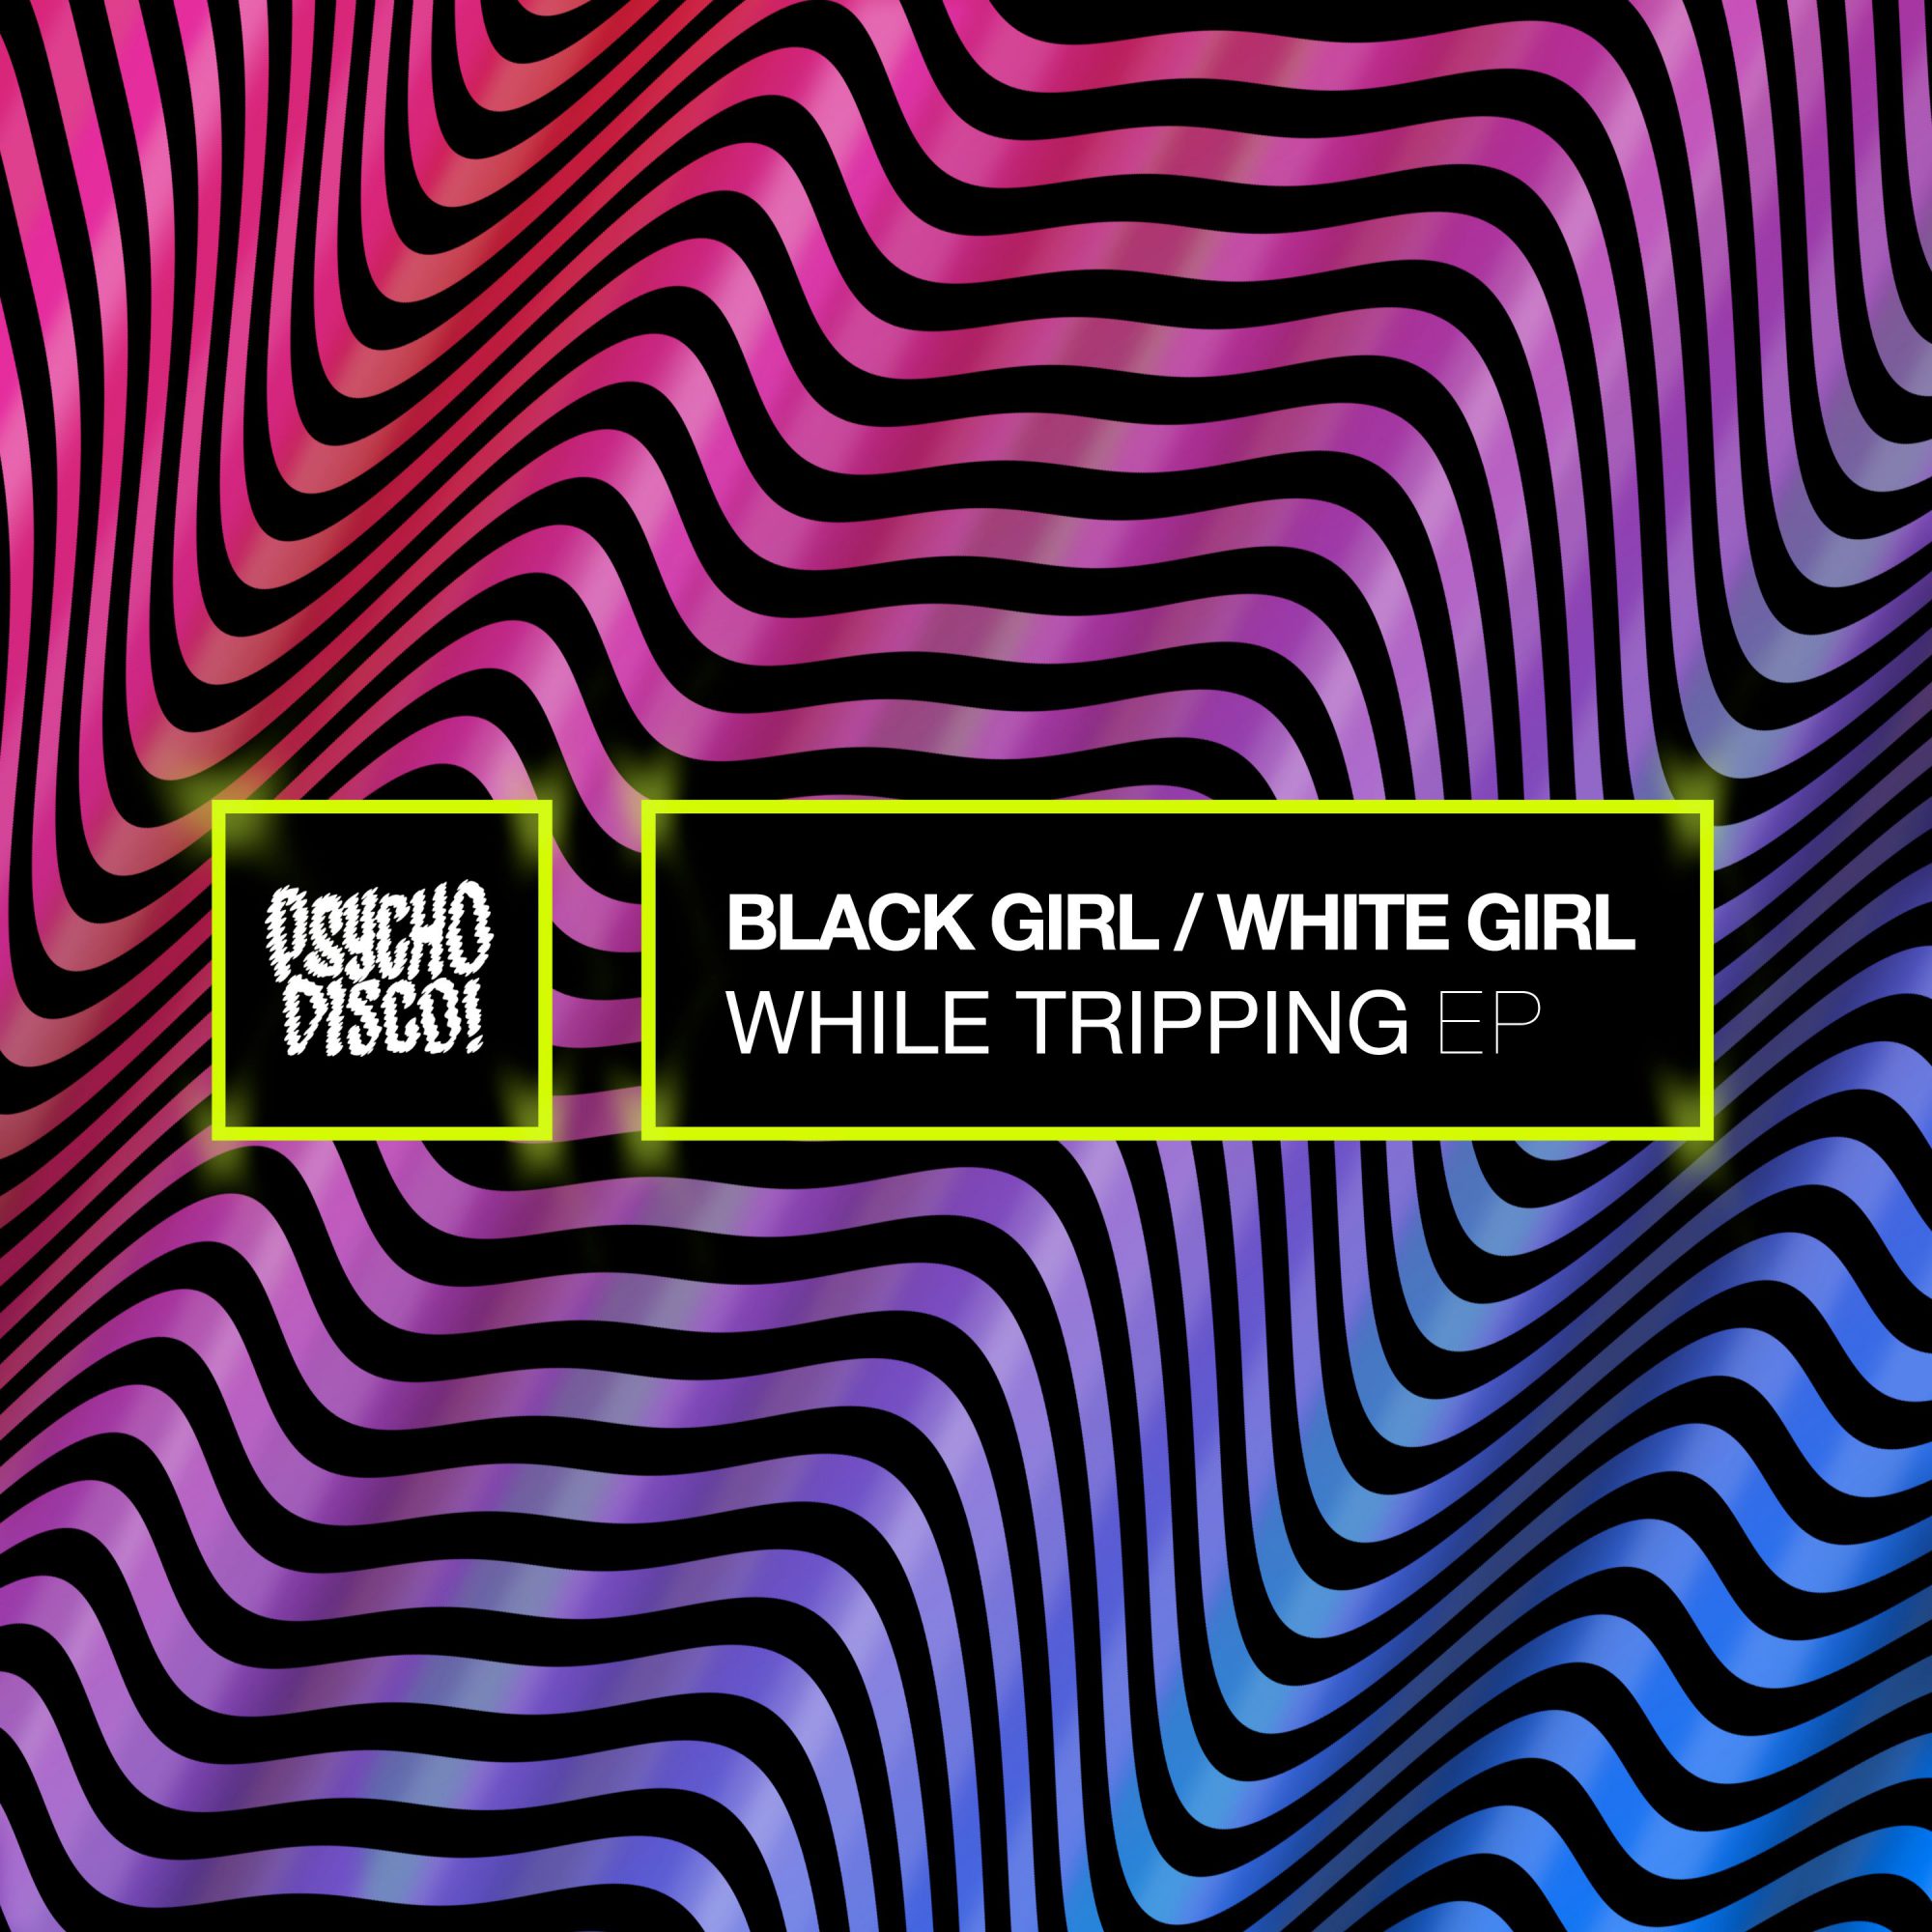 Black Girl / White Girl While Tripping EP